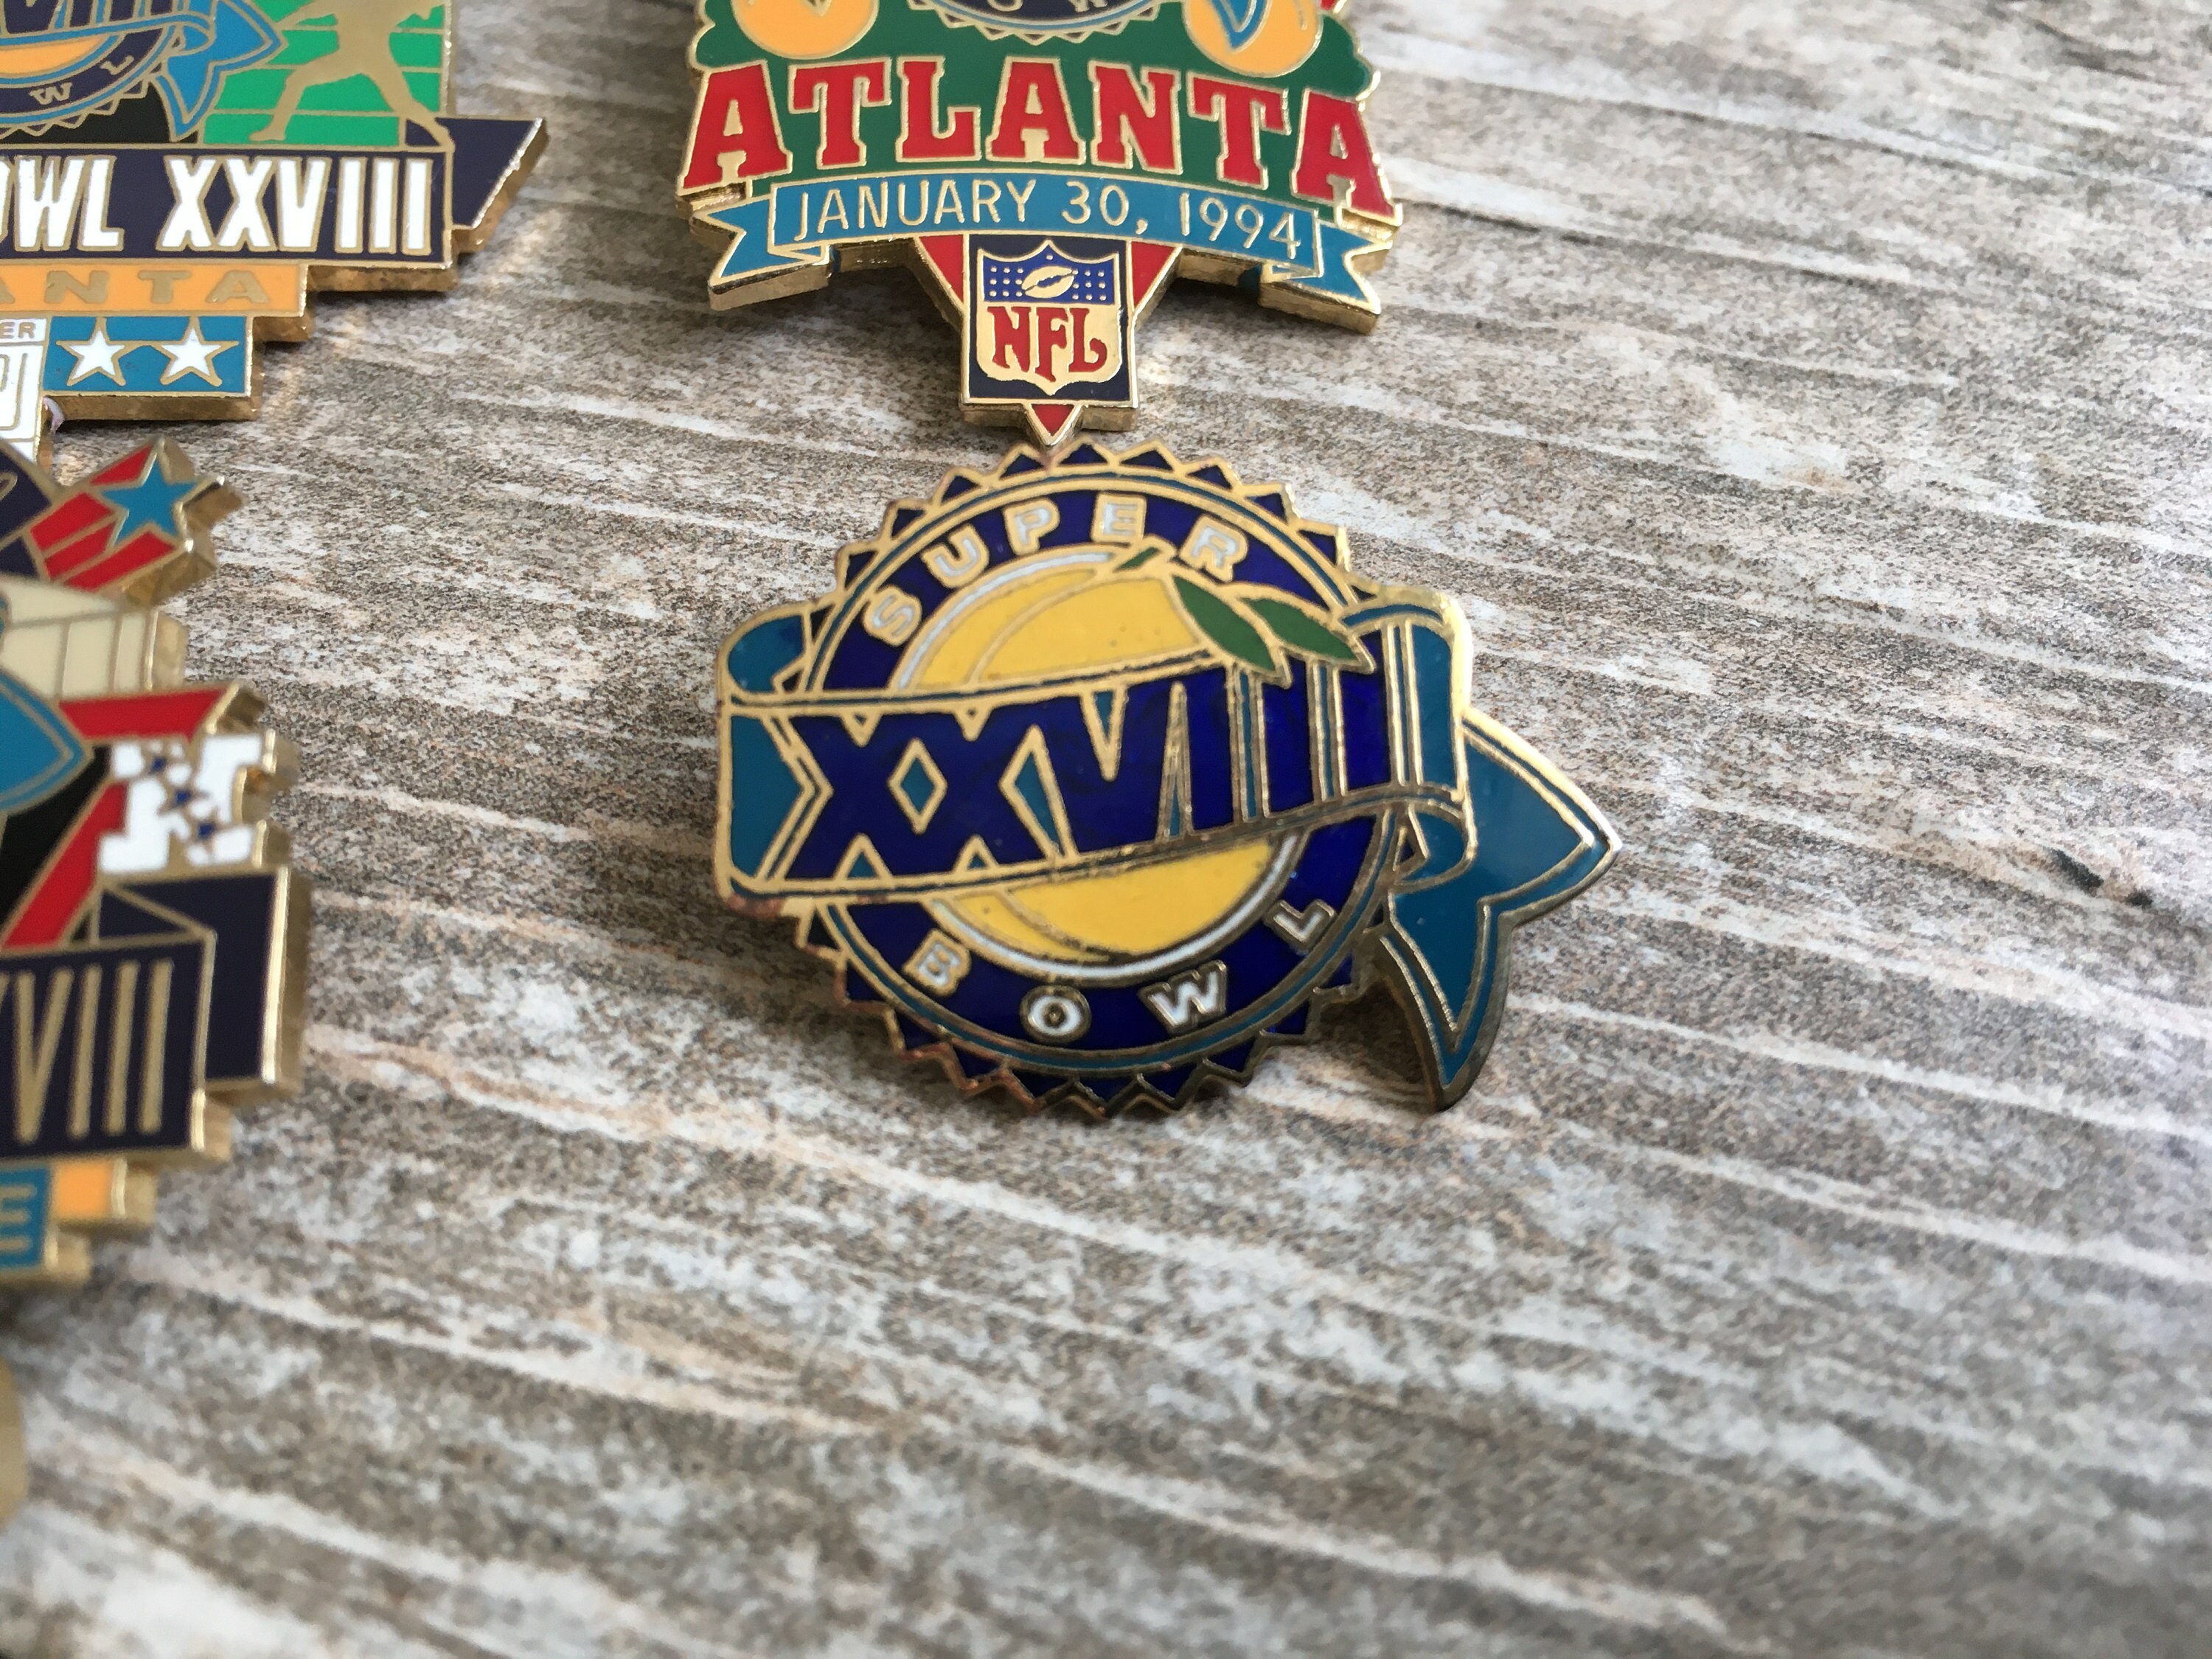 1994 Super Bowl Xxviii Atlanta Georgia Vintage Pinback Pin Lot Etsy